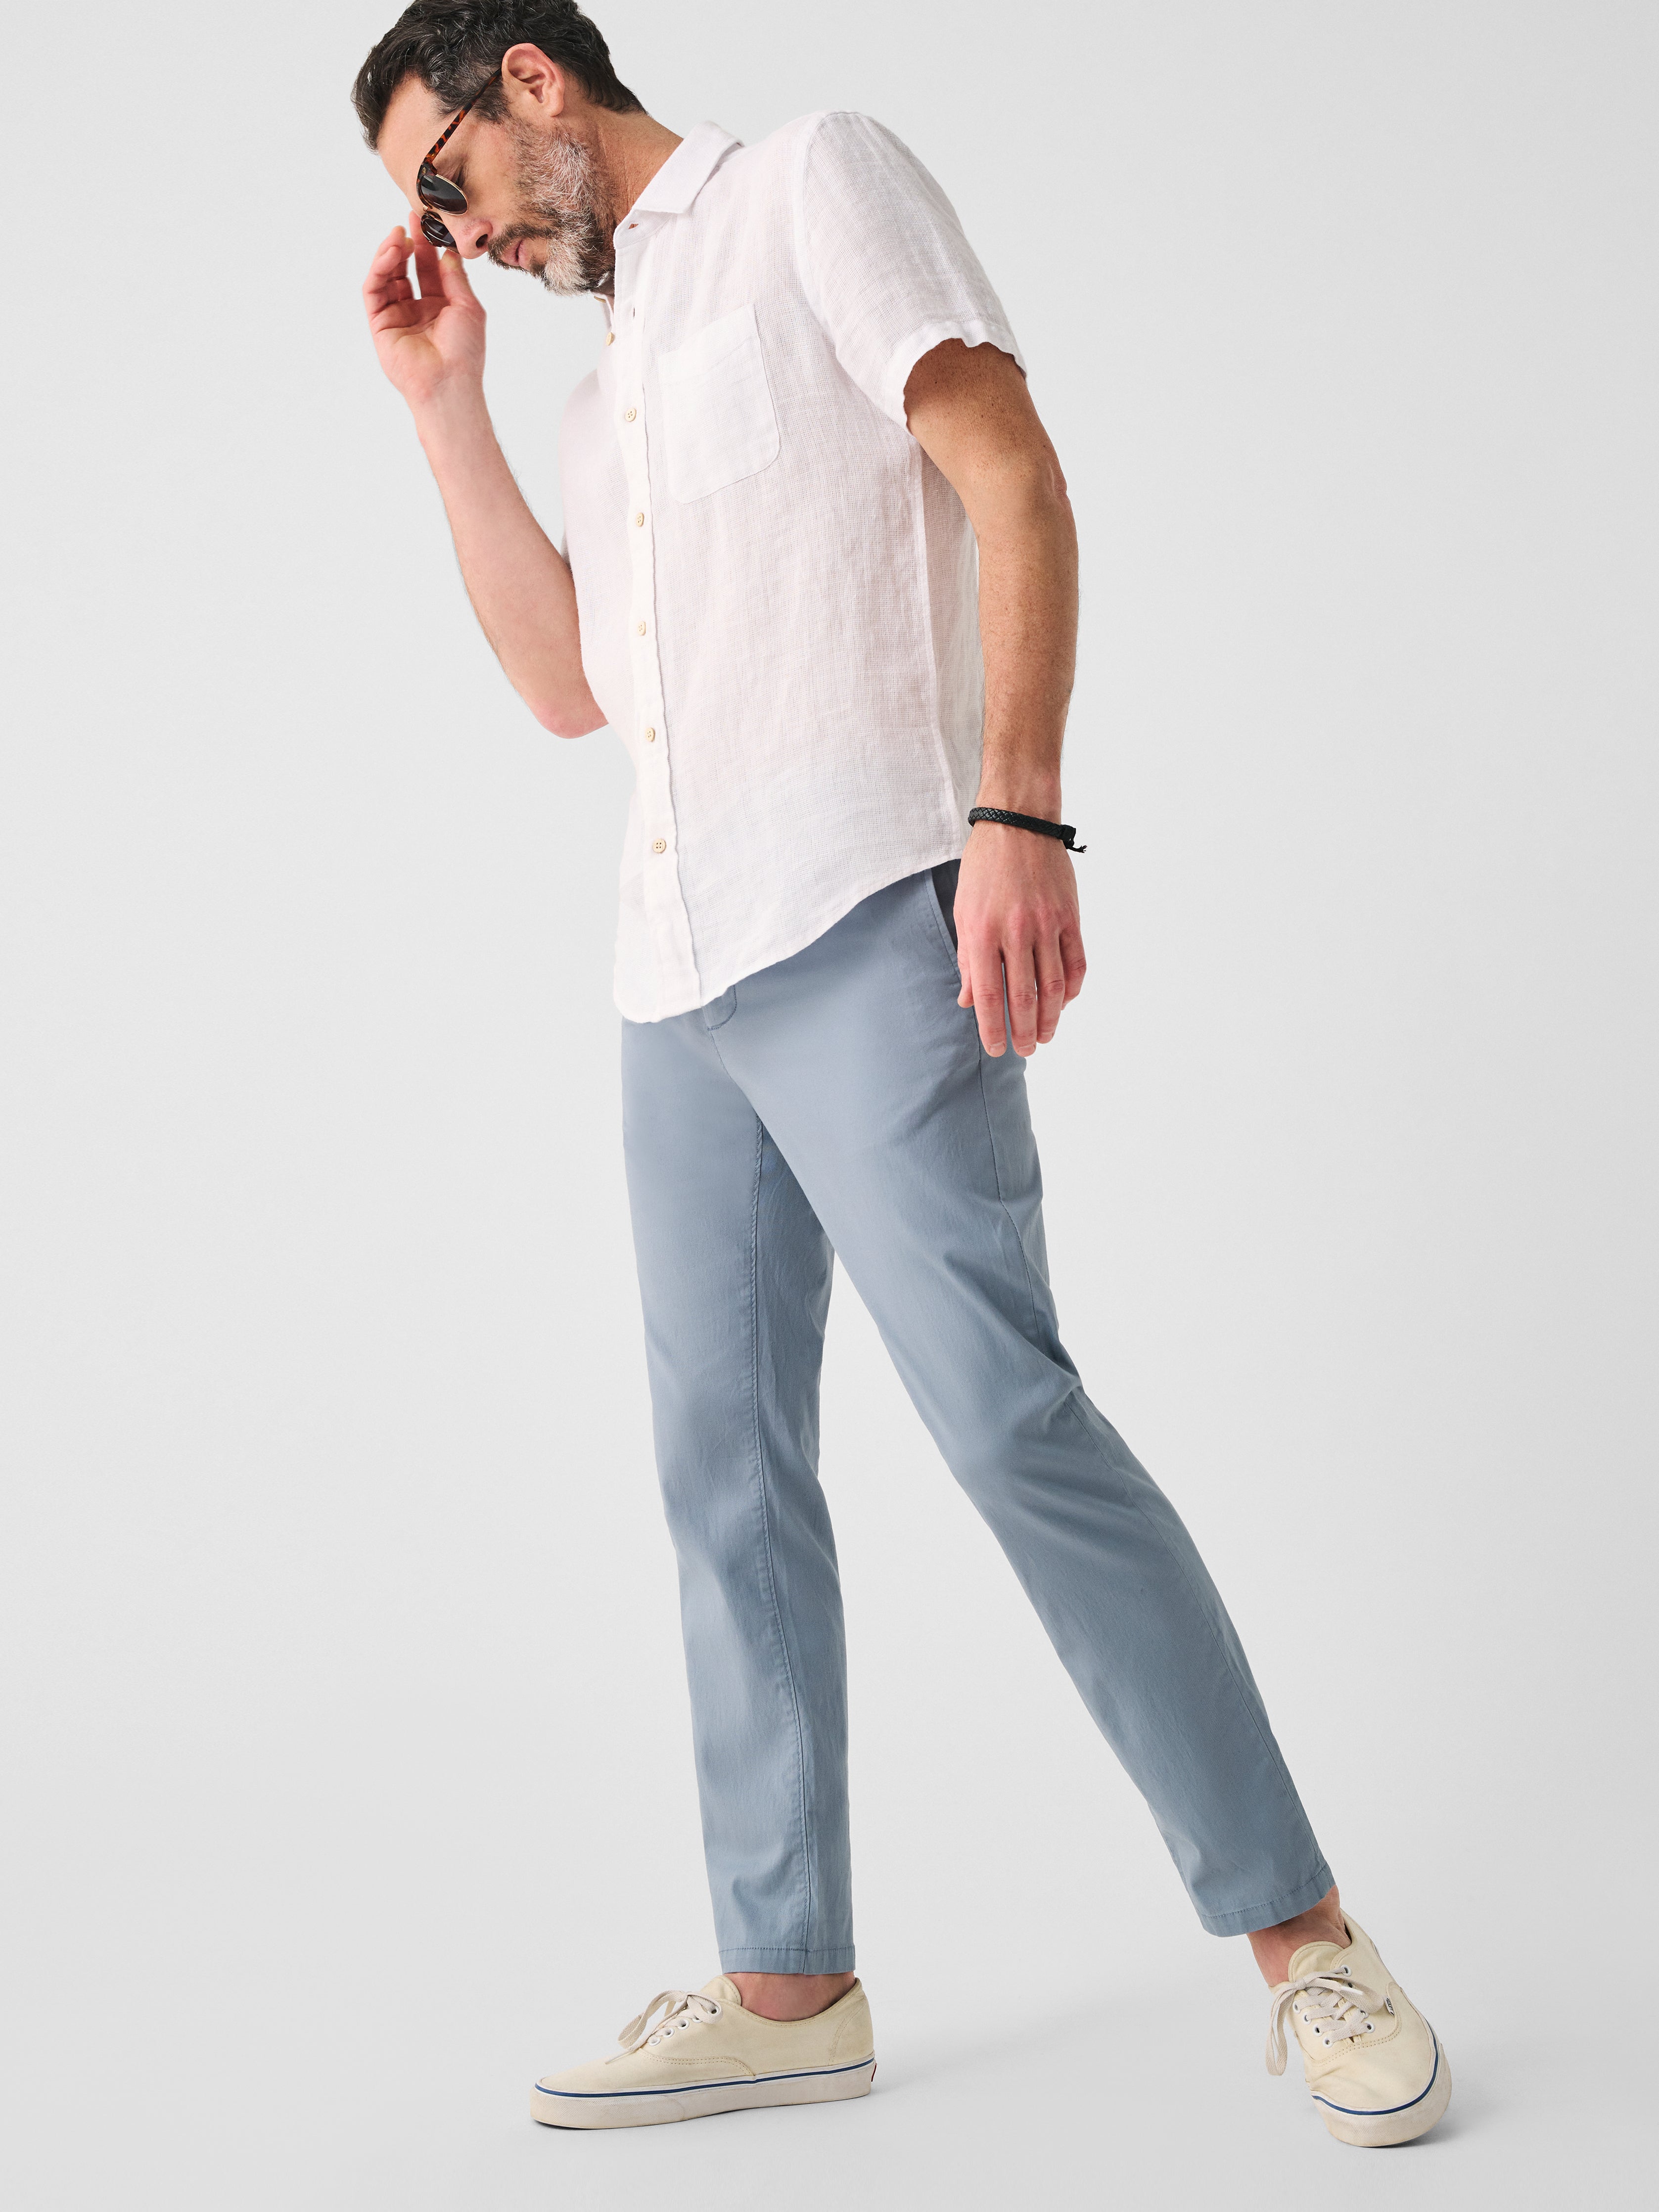 Gray Chinos Men's Pants: Dress Pants, Chinos, Cargo & More - Macy's